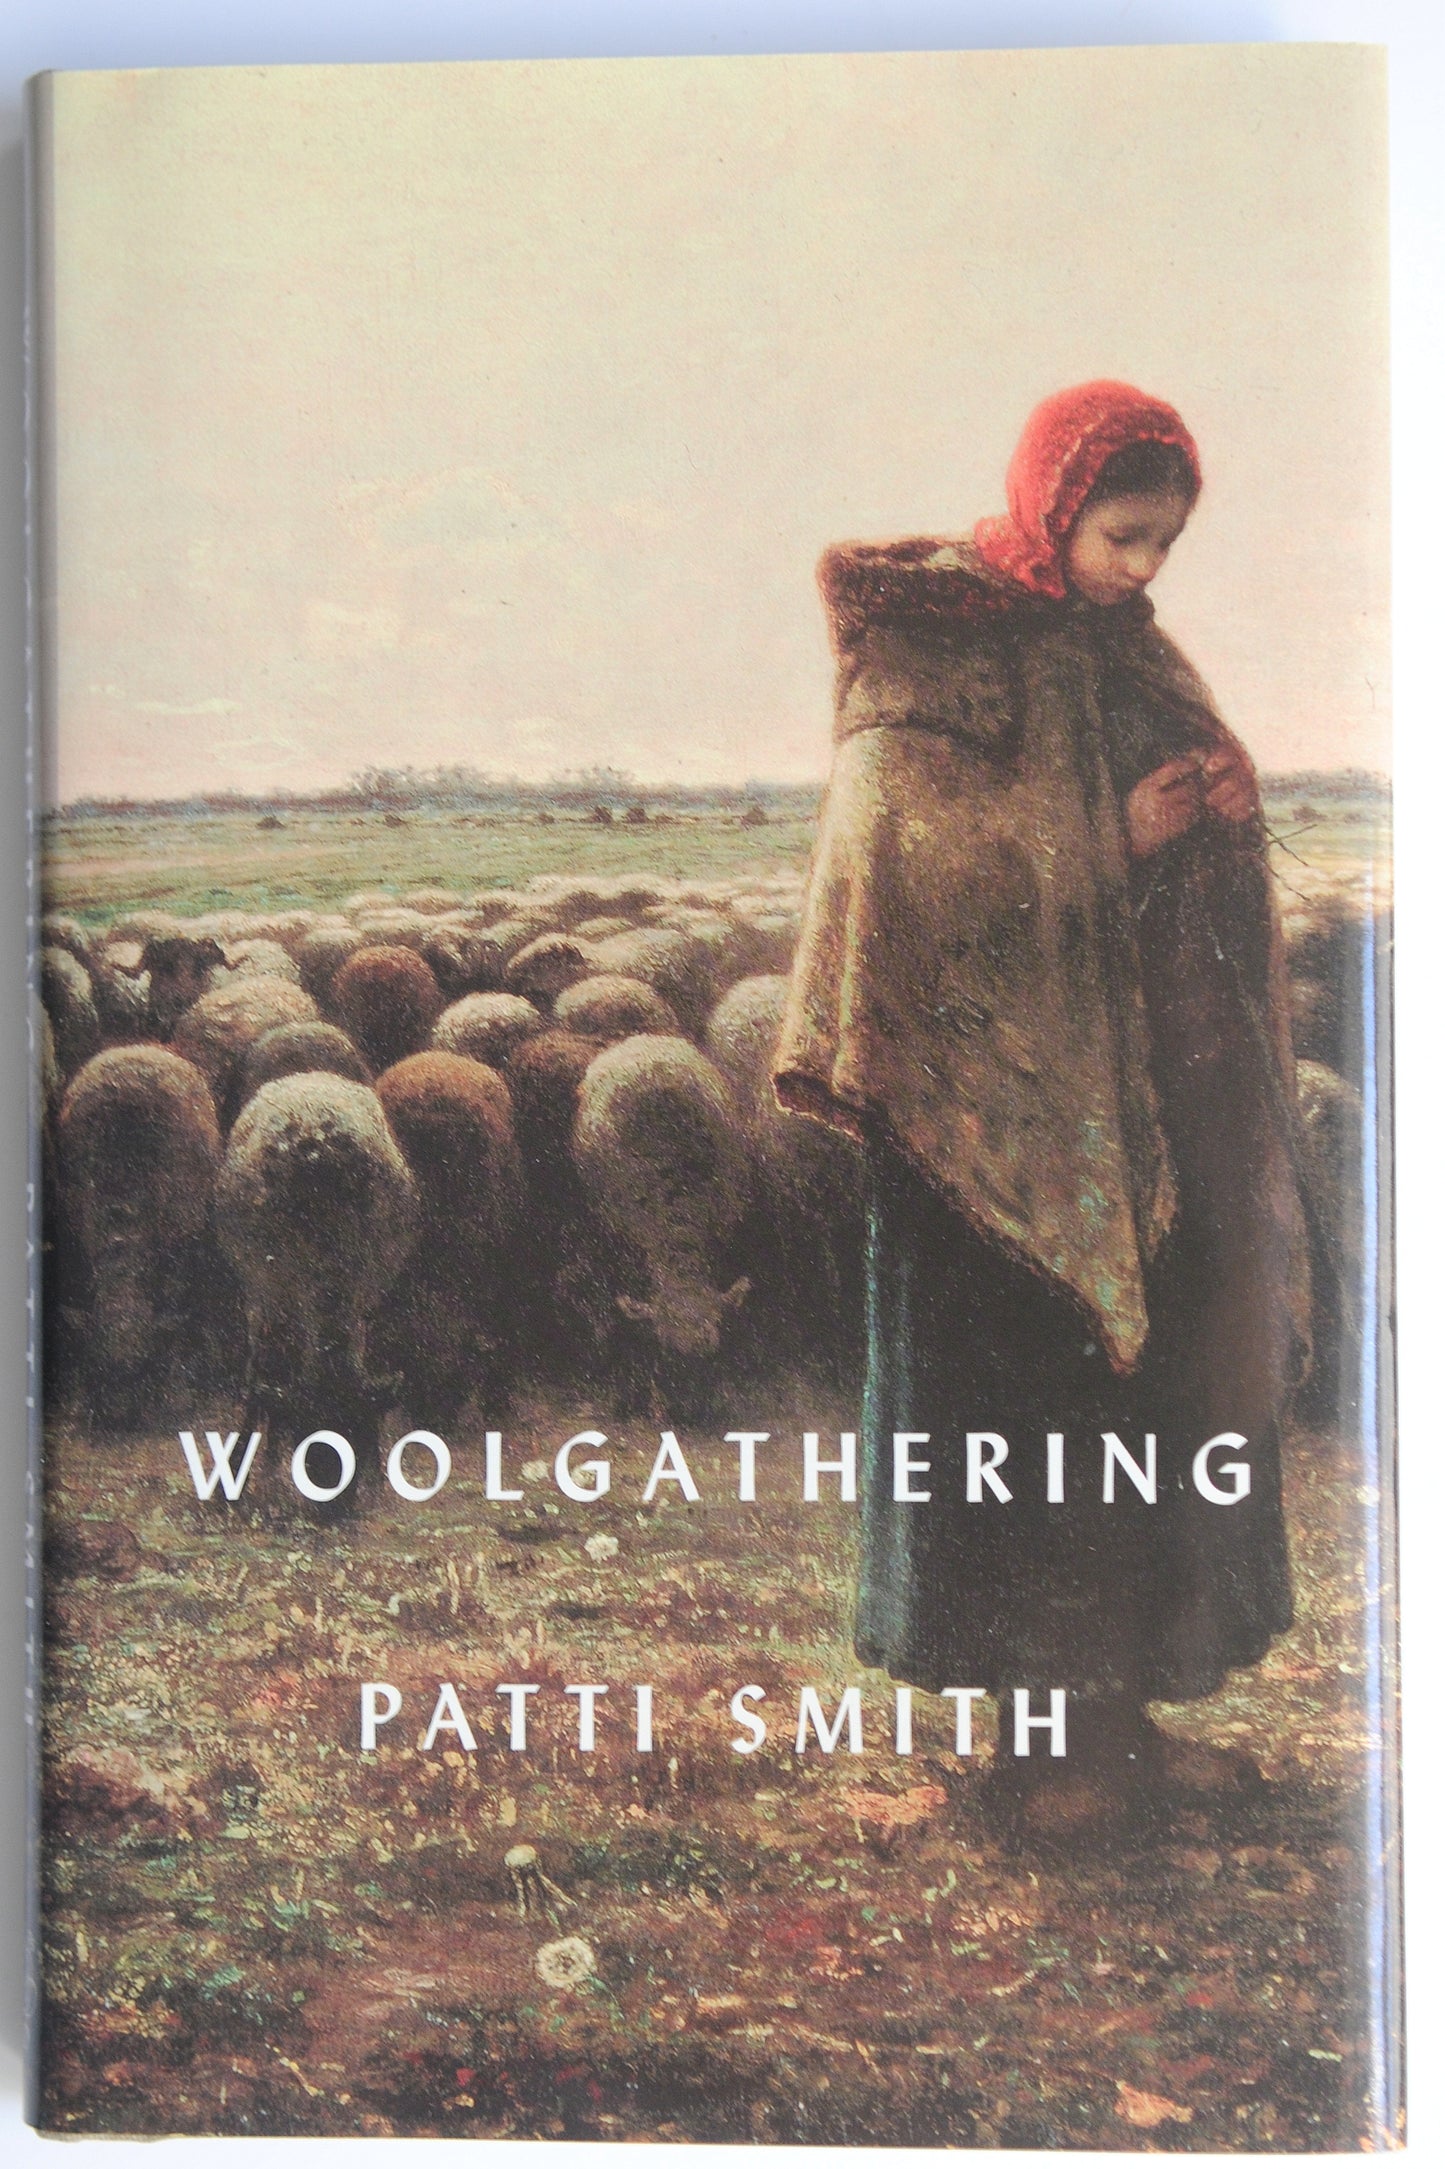 Patti Smith "Woolgathering" Signed Book